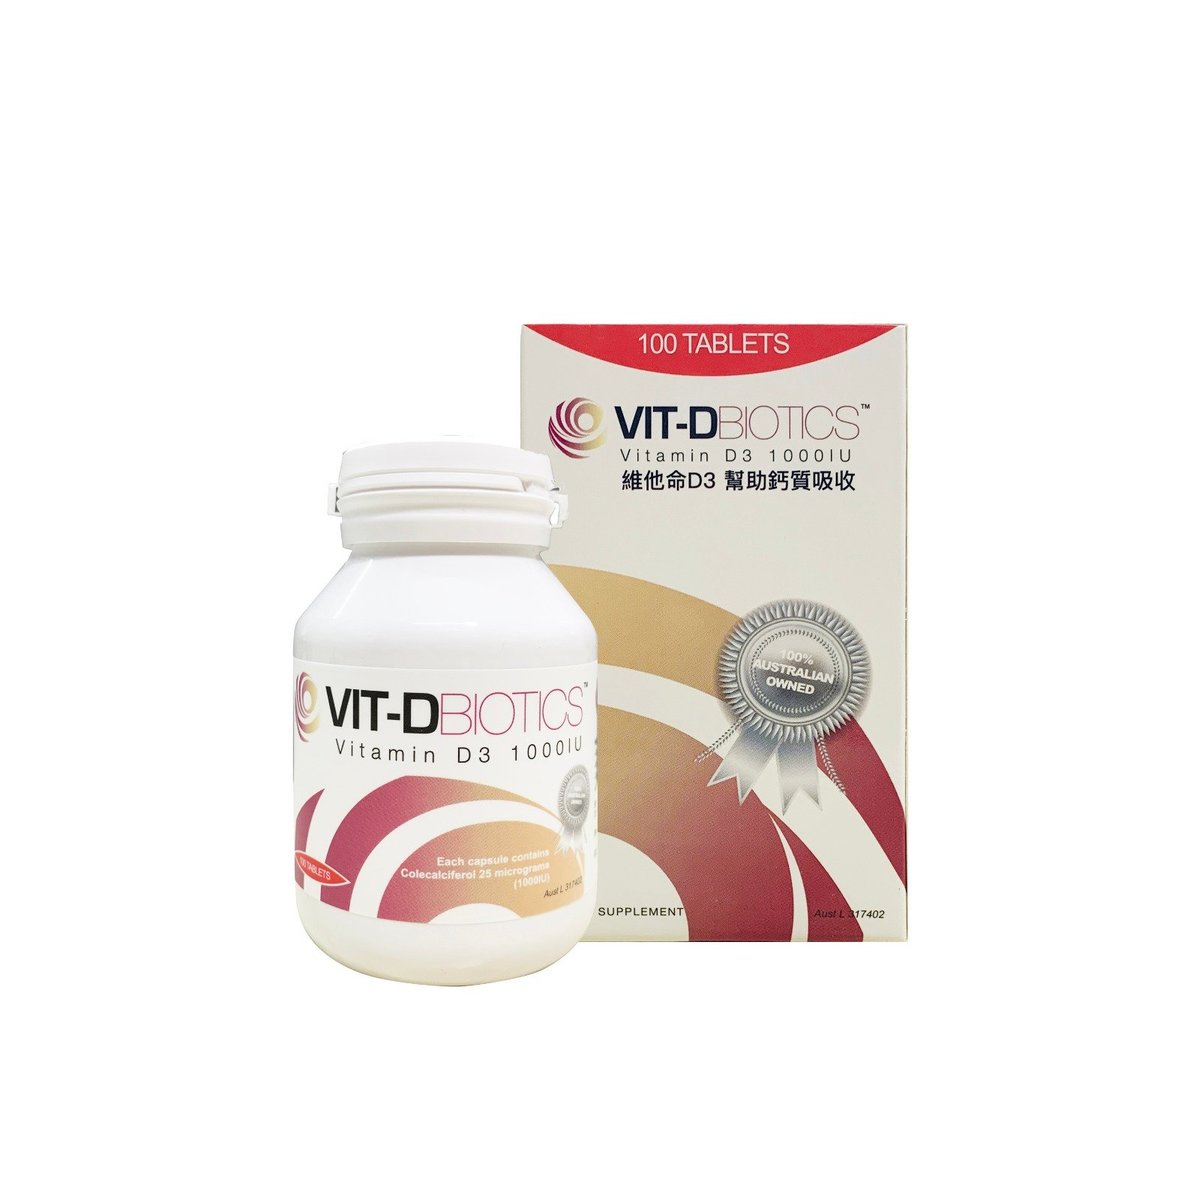 VIT-DBIOTICS Vitamin D3 1000IU